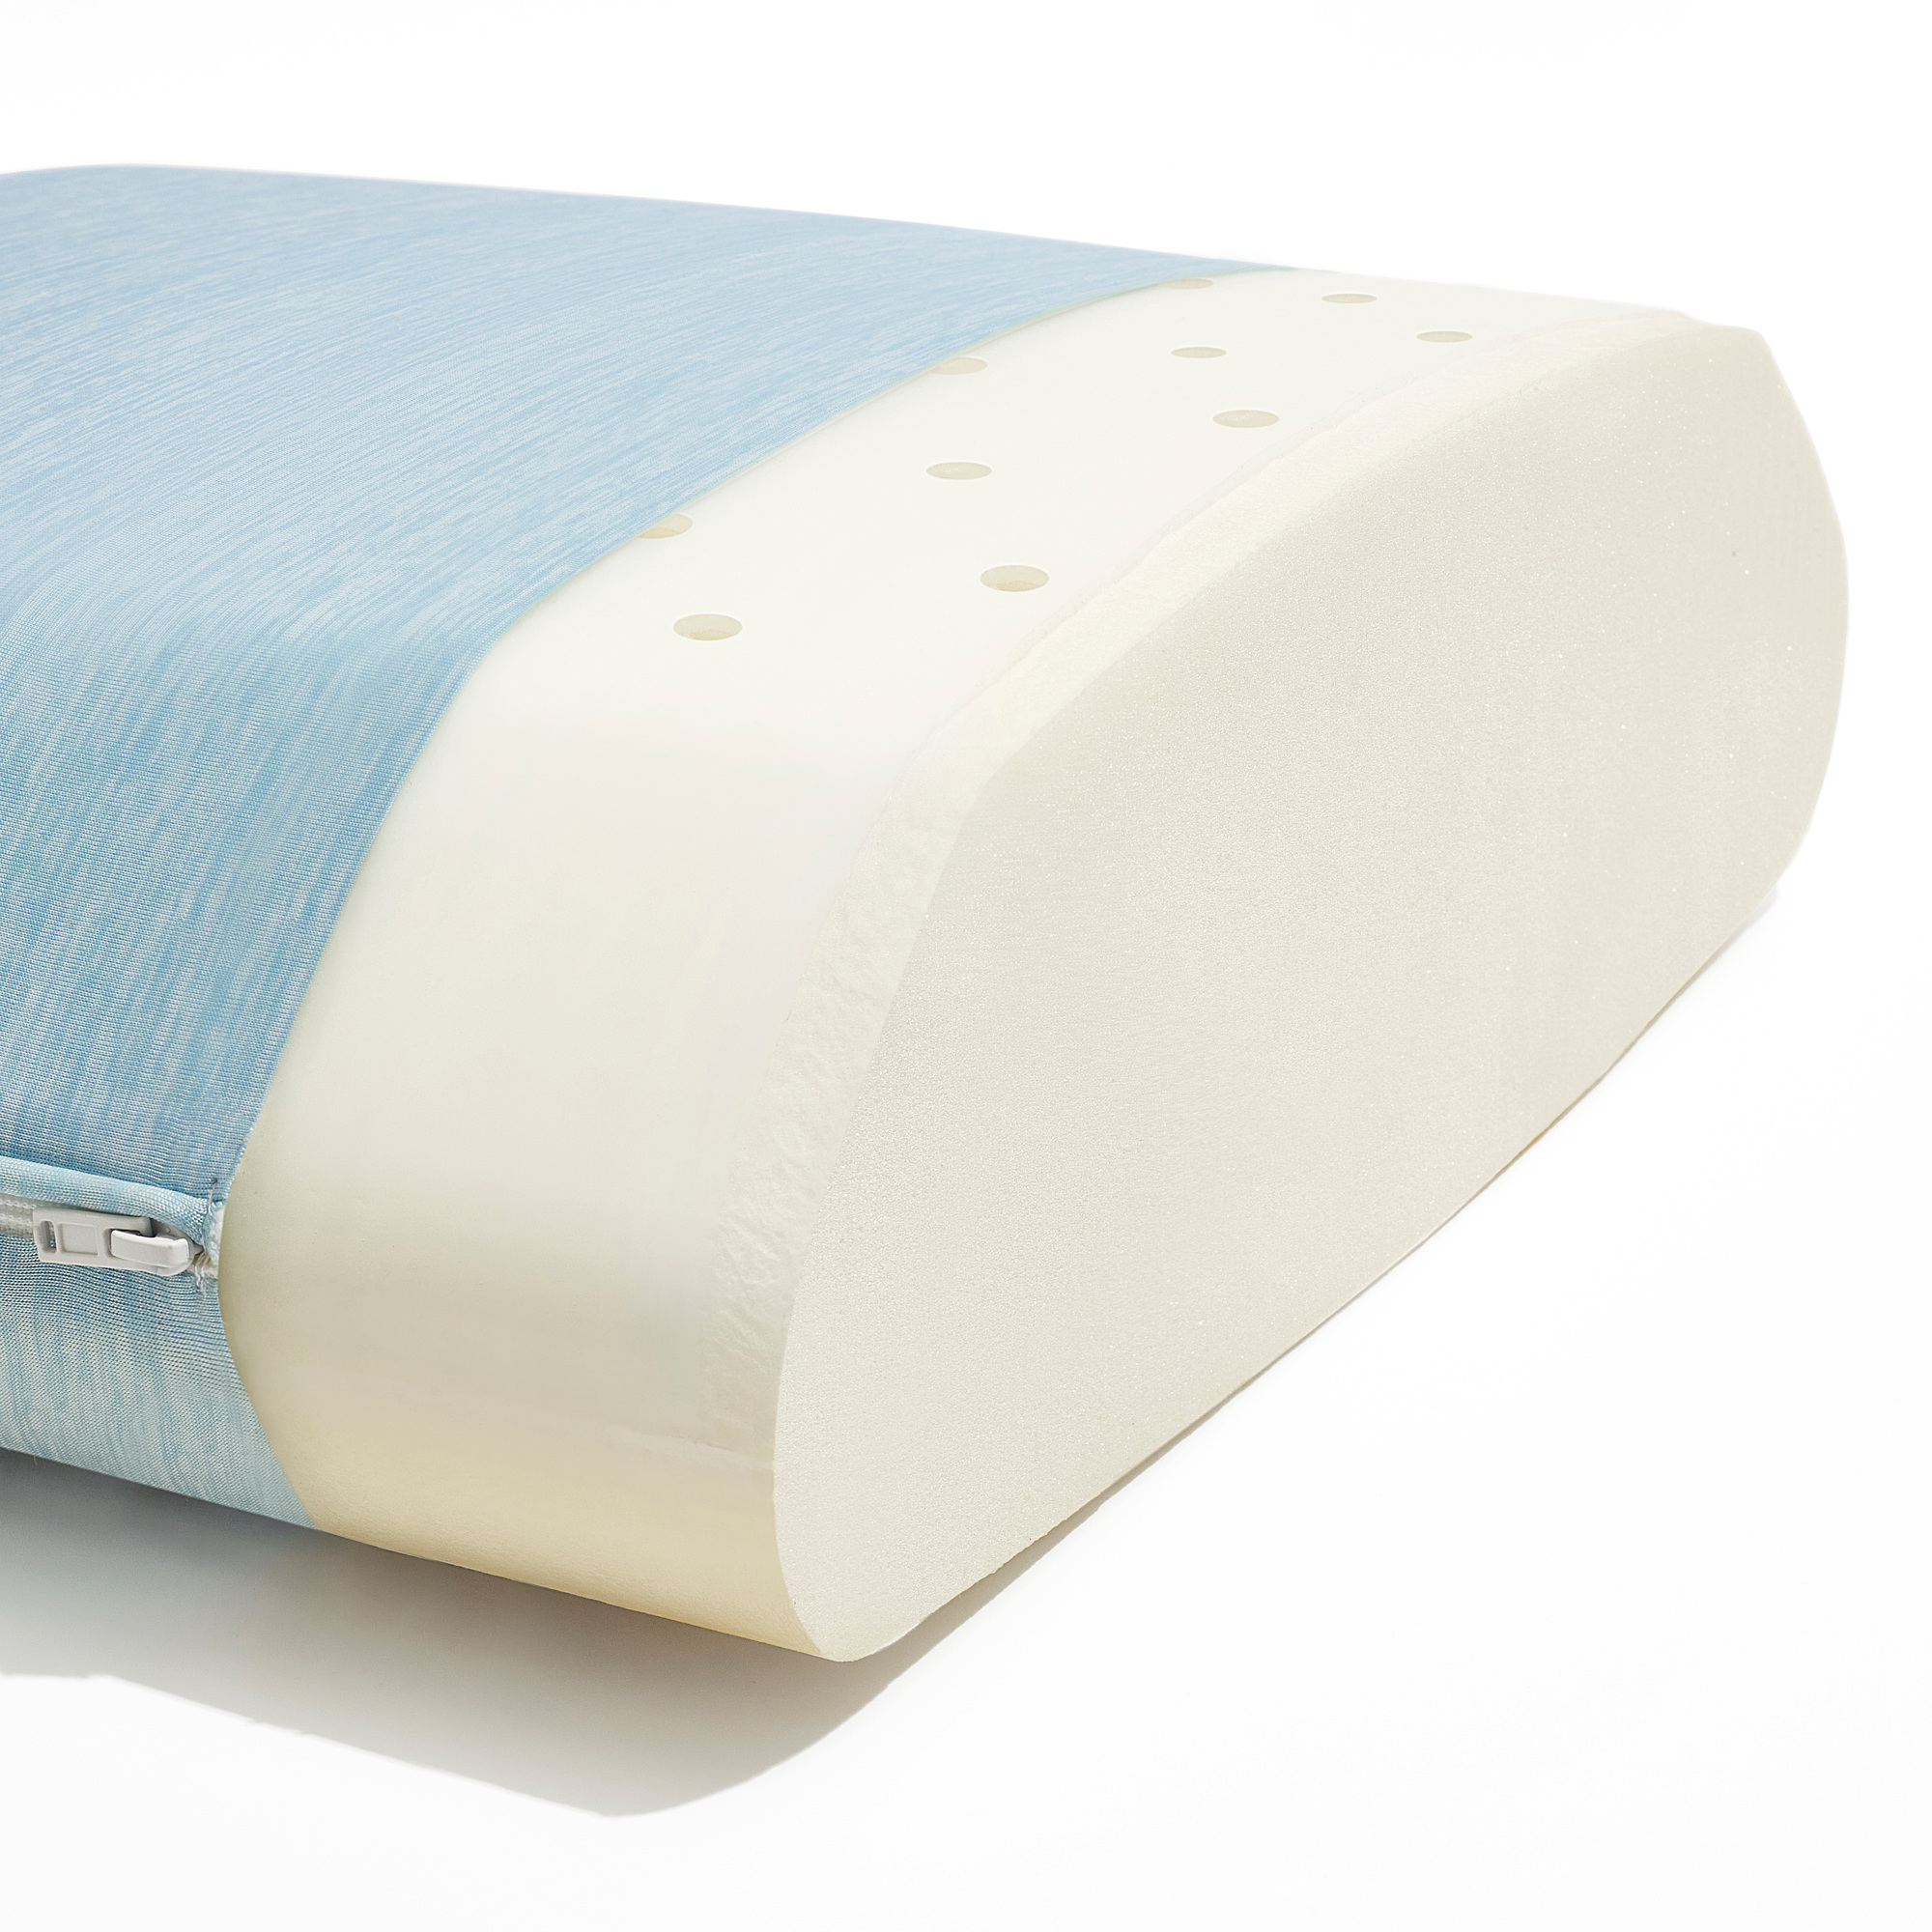 ergonomic pillow, side/back sleeper, light blue | IKEA Kong Macau